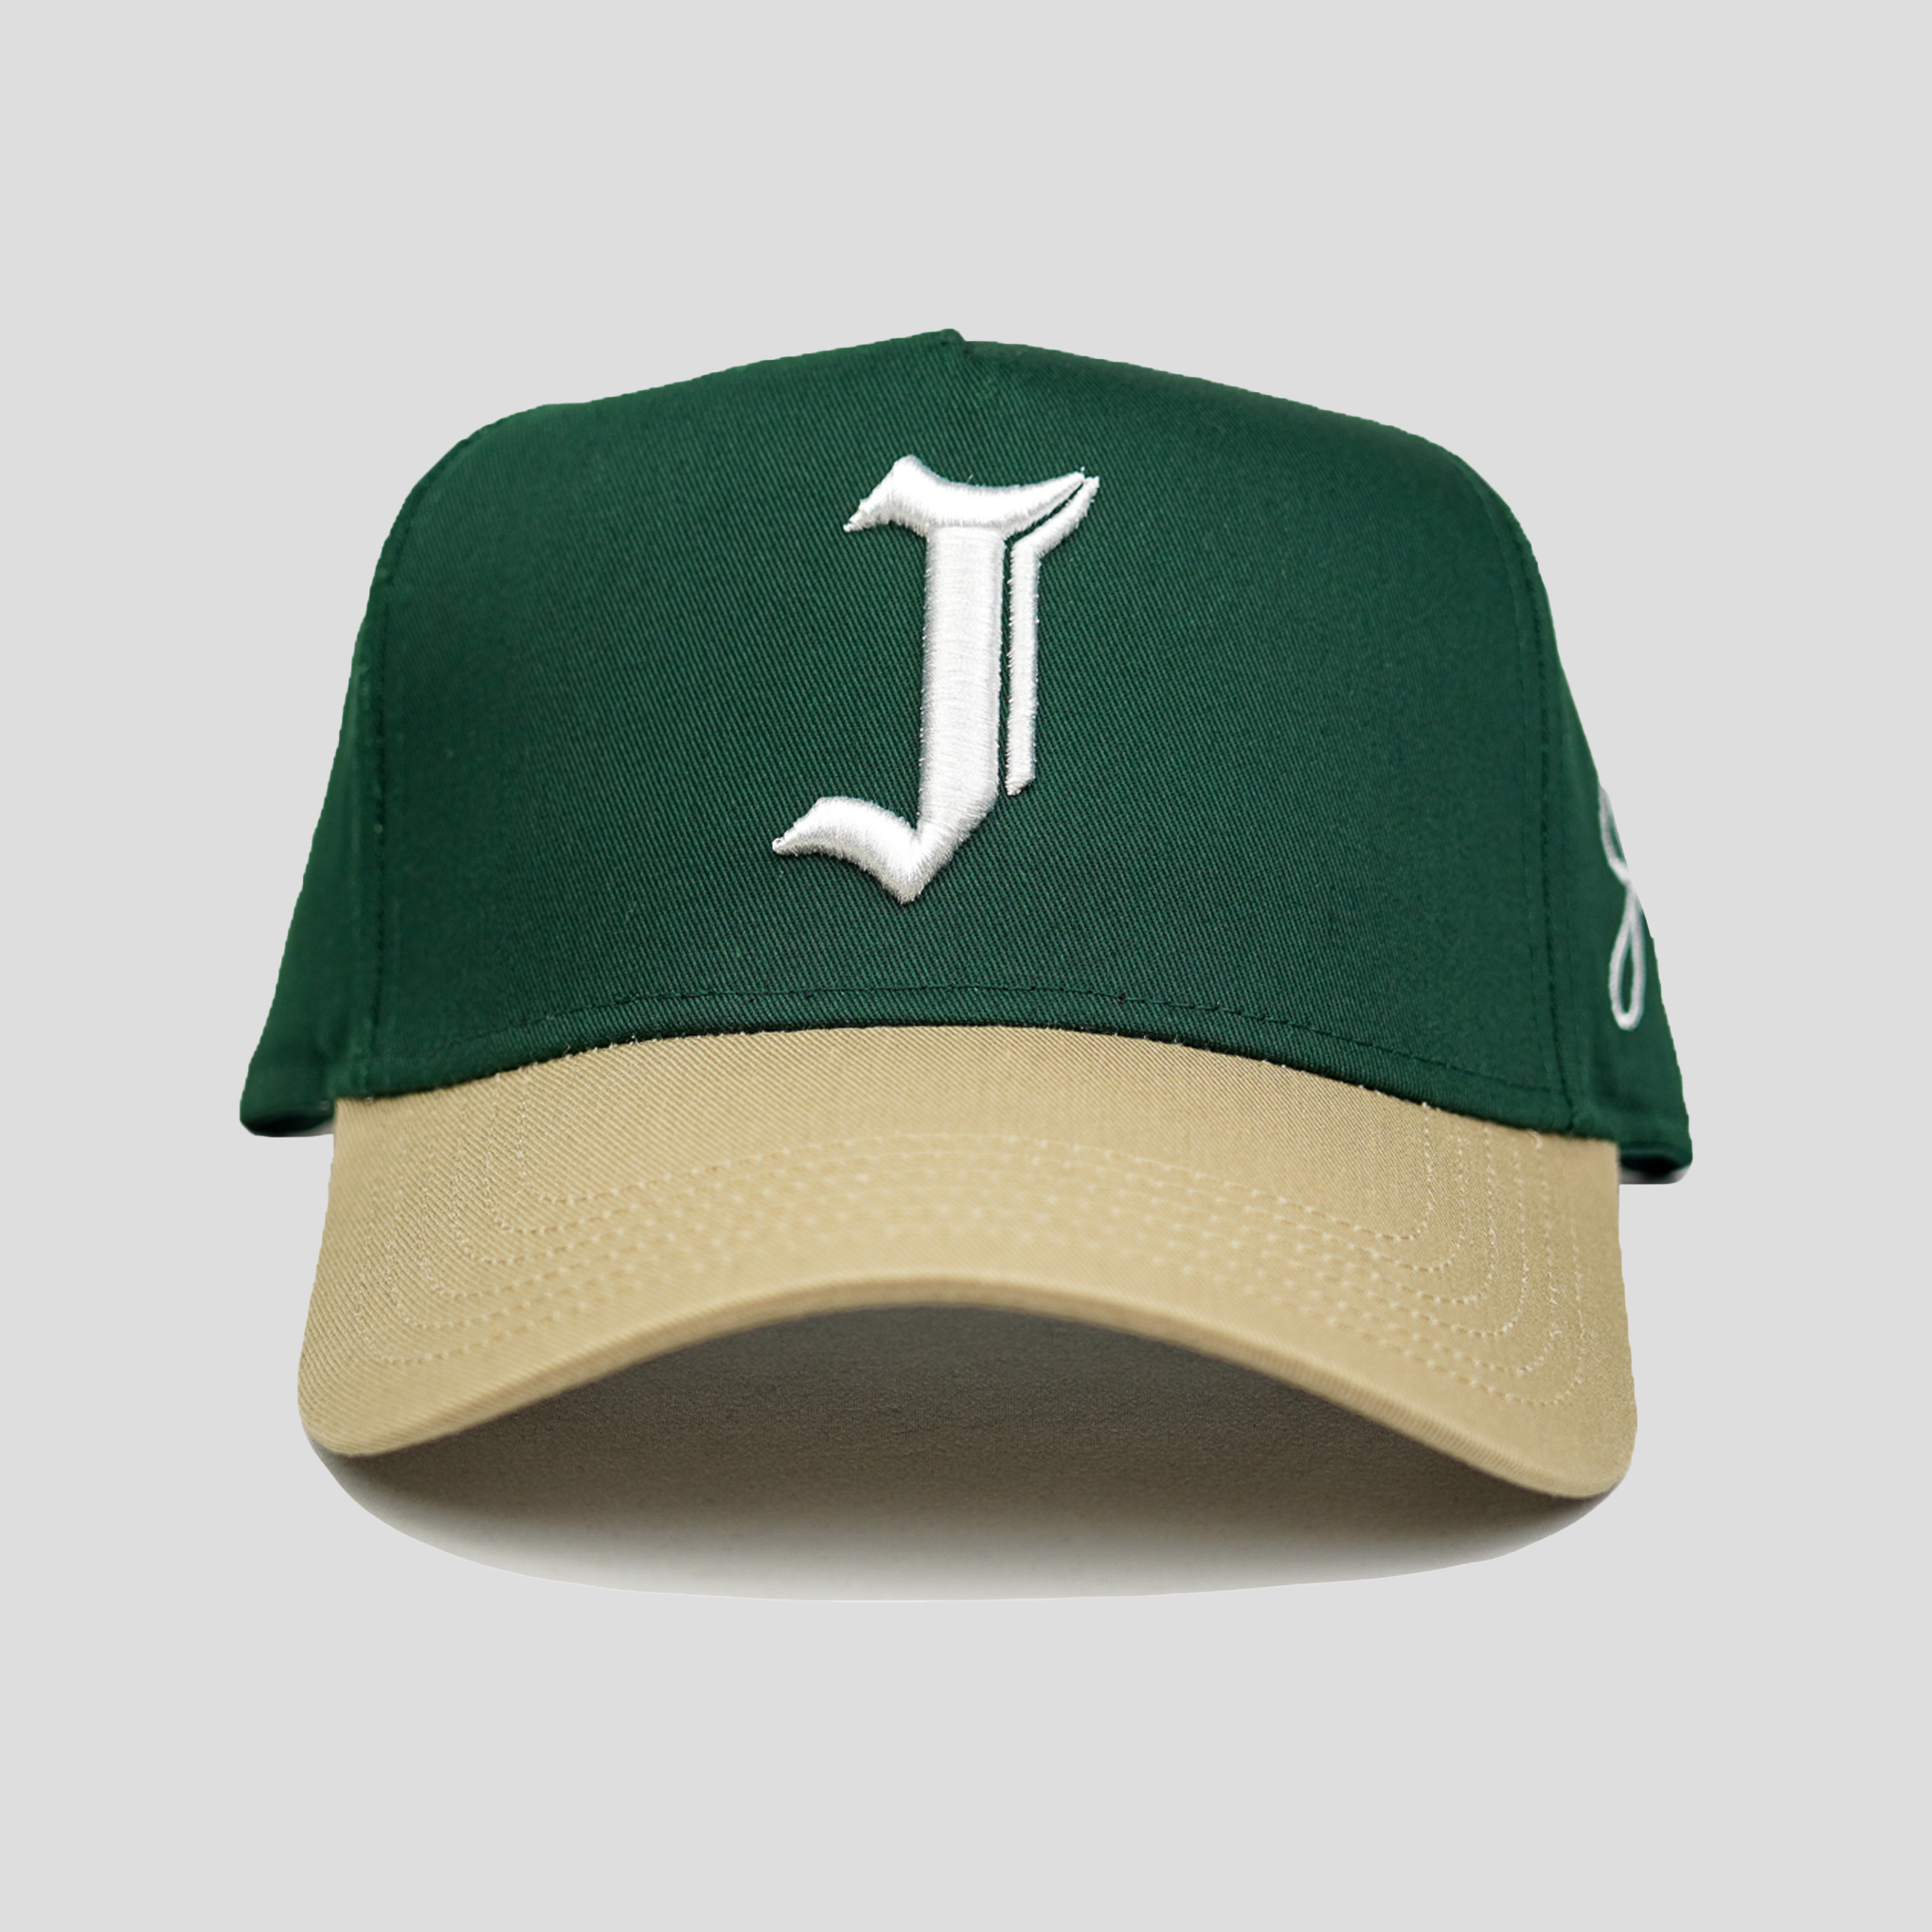 "J" Signature Snapback Hat (GREEN/KHAKI)